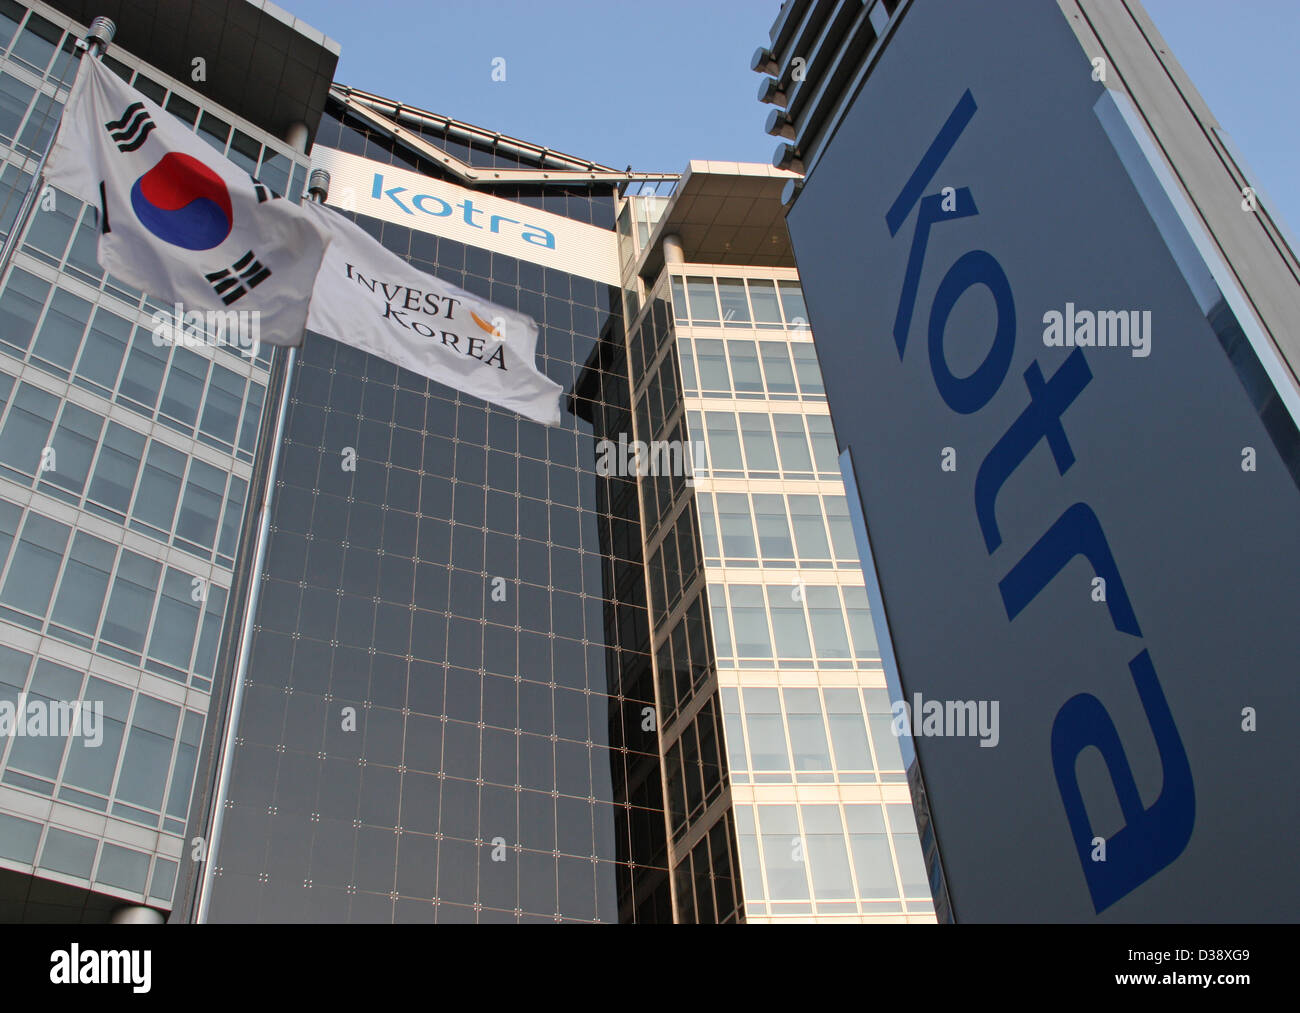 South Korea: KOTRA (Korea Trade Investment Promotion Agency) headquarter, Seoul Stock Photo